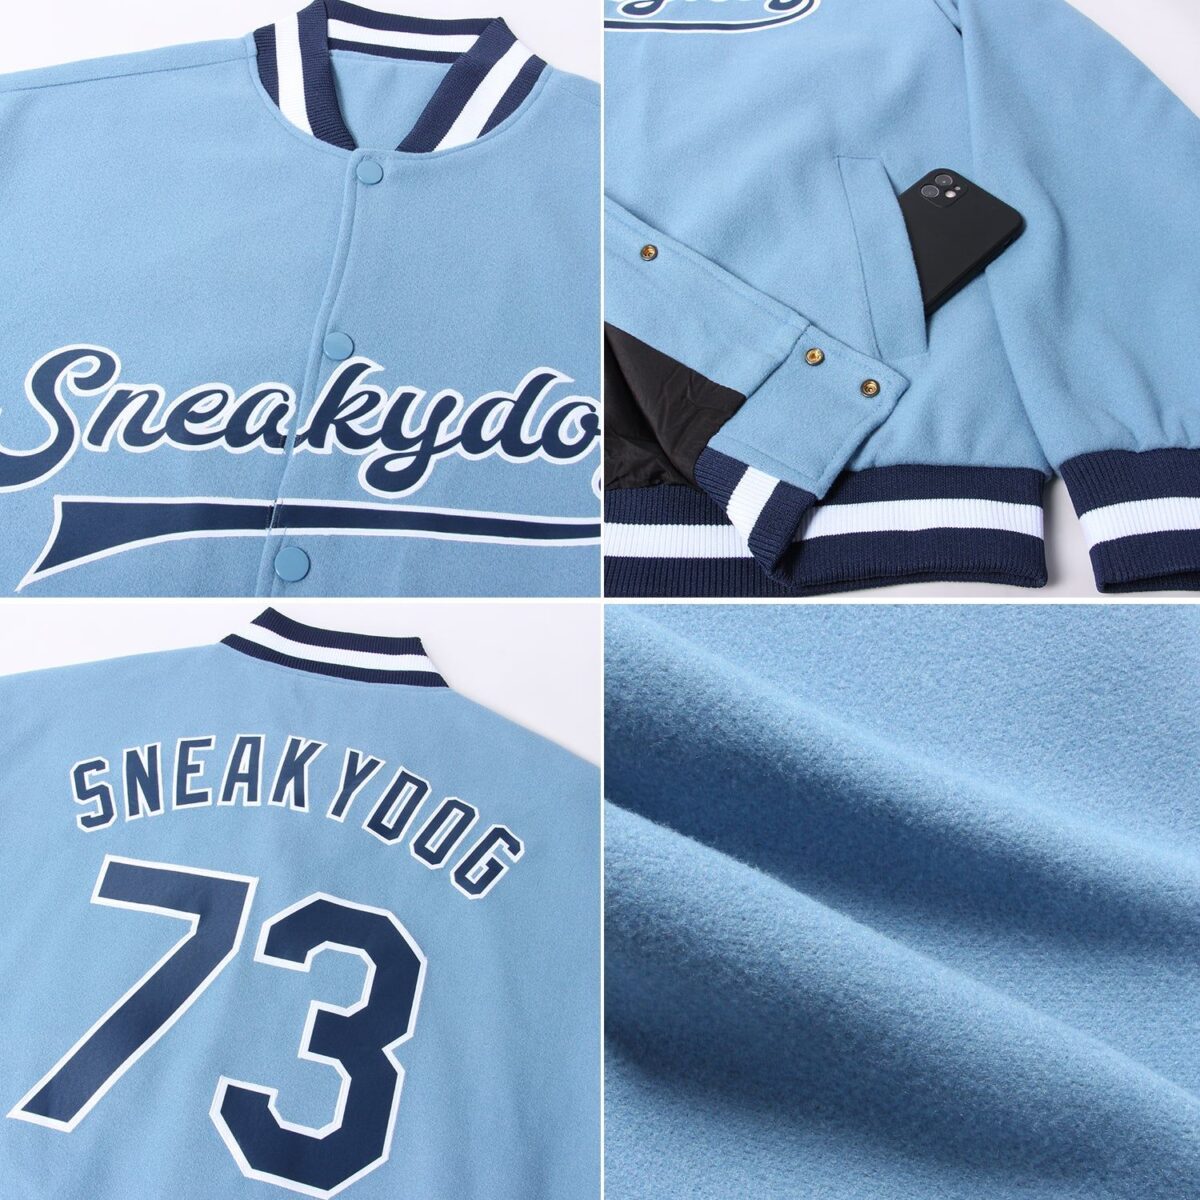 School Baseball Jackets with Sky & Navi 2